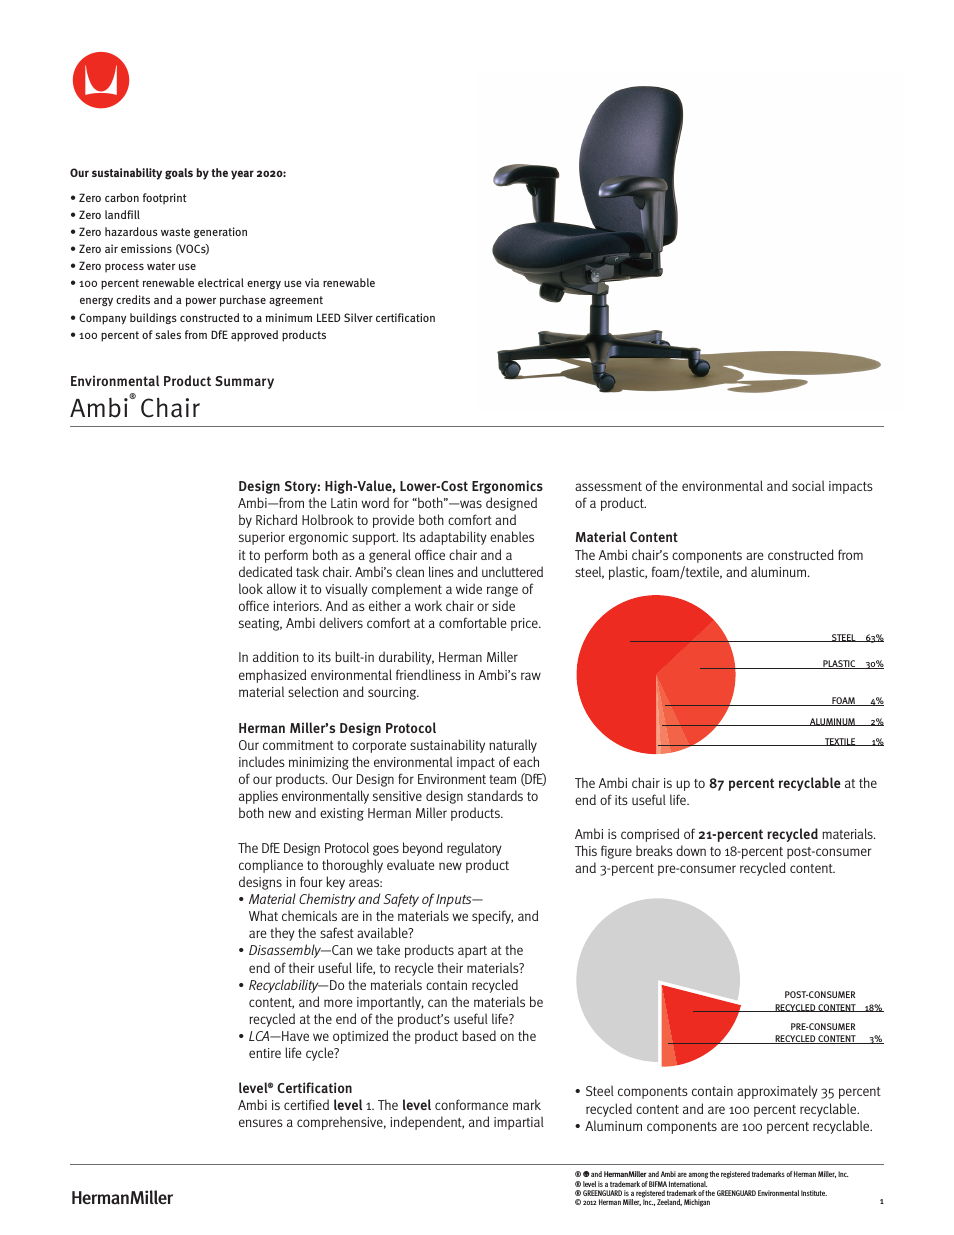 Ambi Chairs - Environmental Product Summary